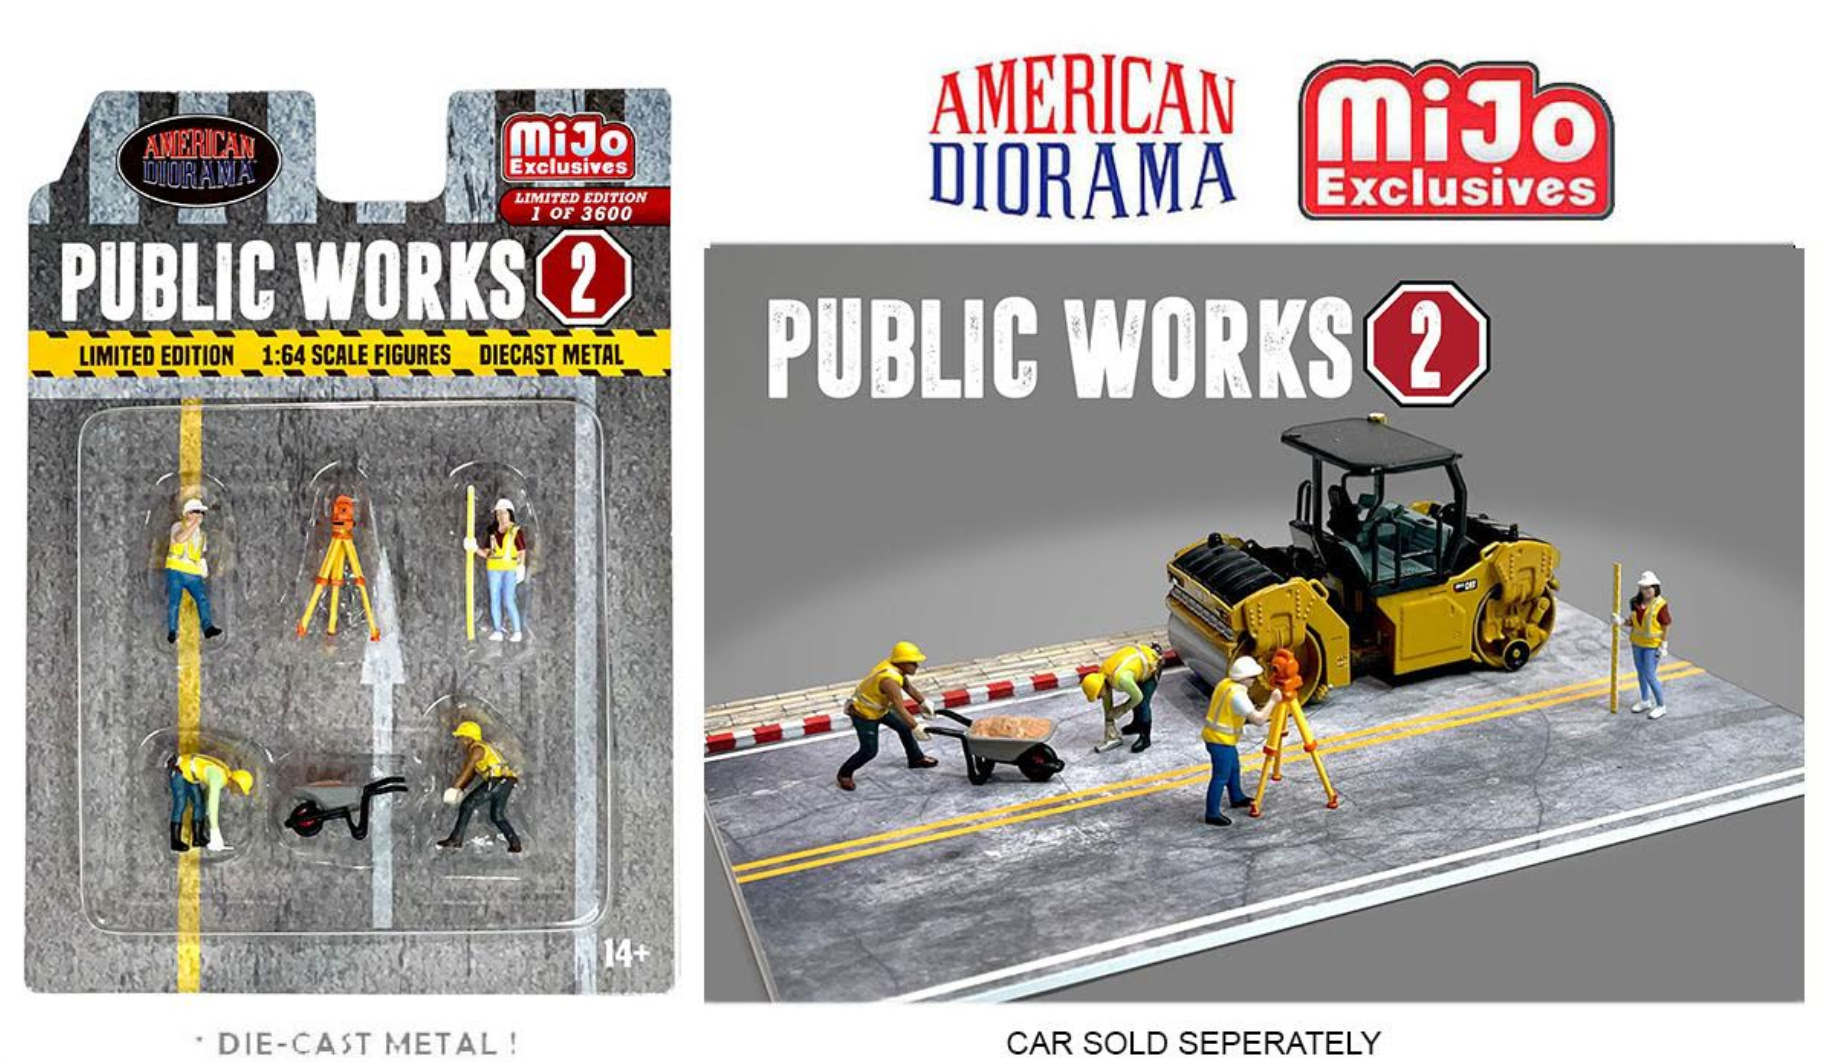 American Diorama 1:64 MiJo Exclusive Figures Set - Mail Service